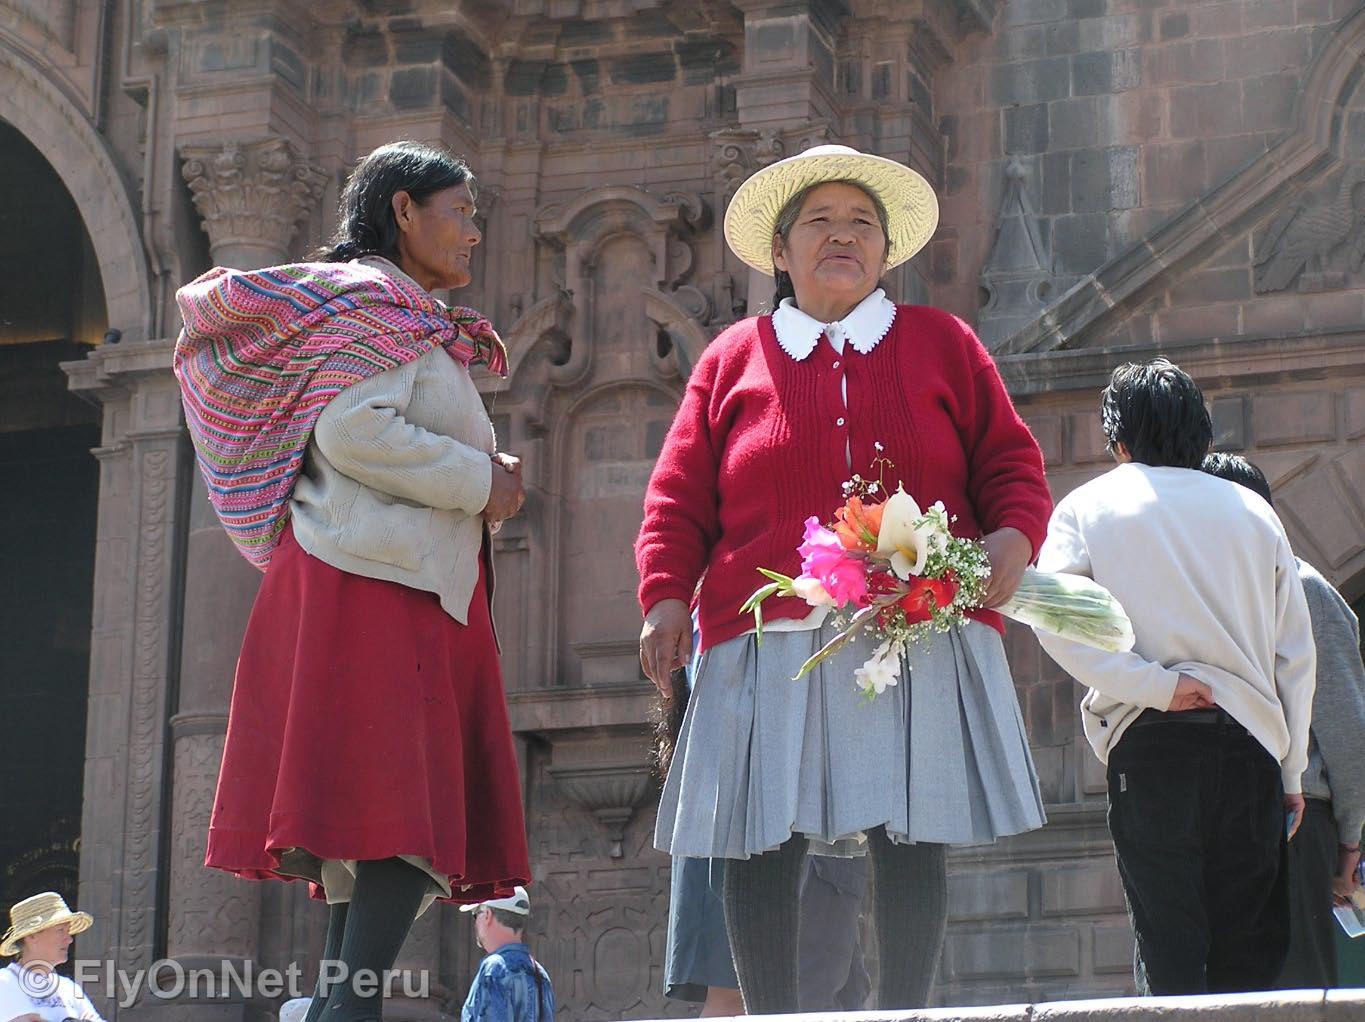 Album photos: Femmes de Cuzco